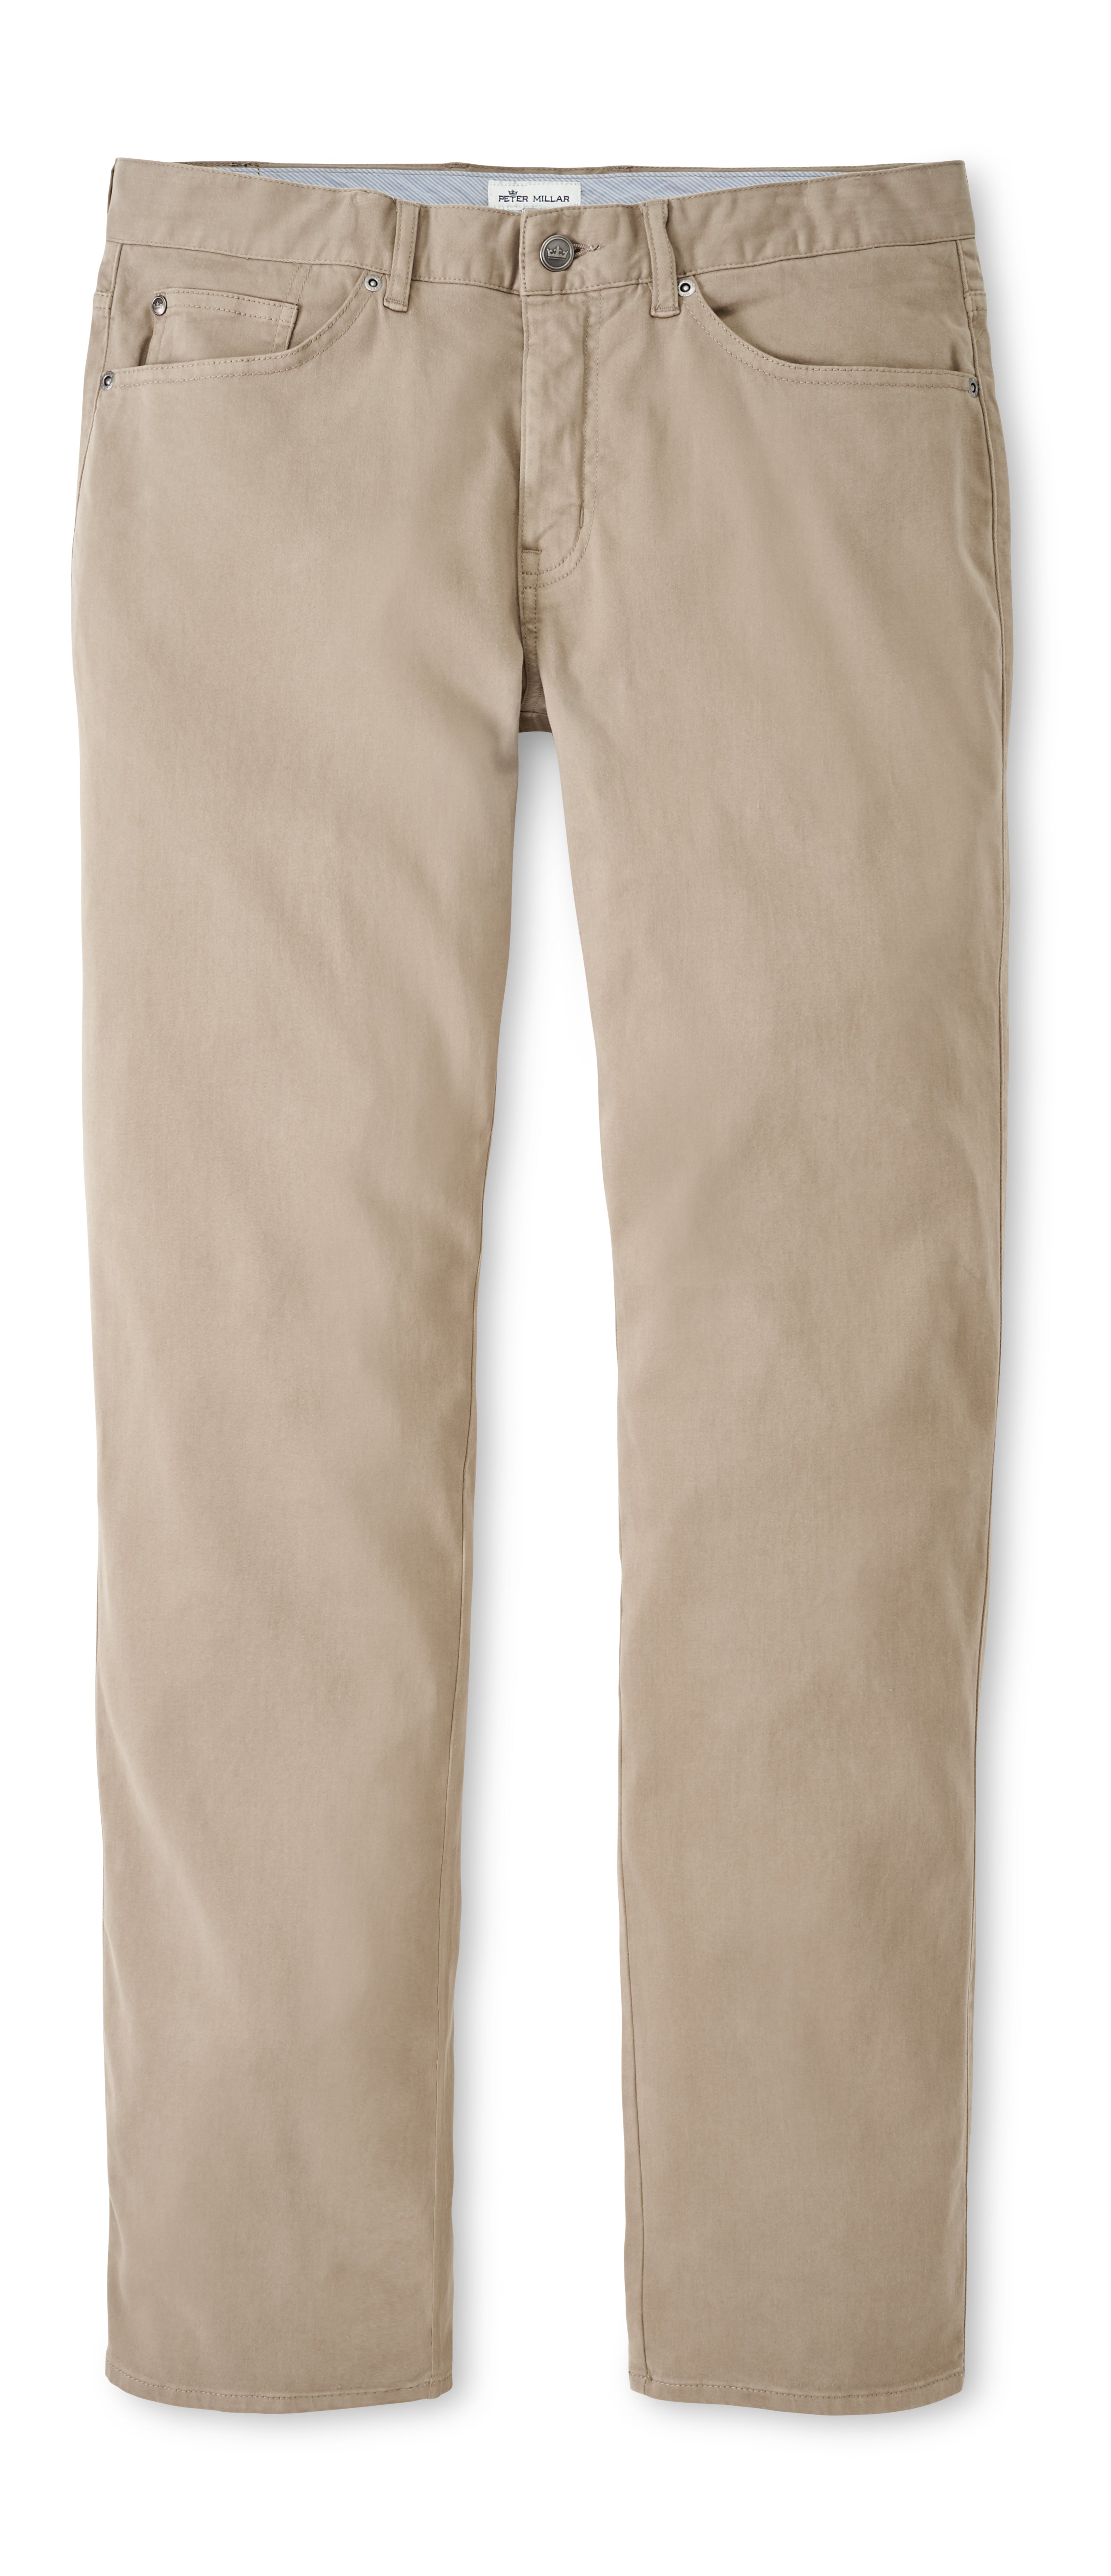 Ultimate Sateen Five-Pocket Pant in Khaki by Peter Millar